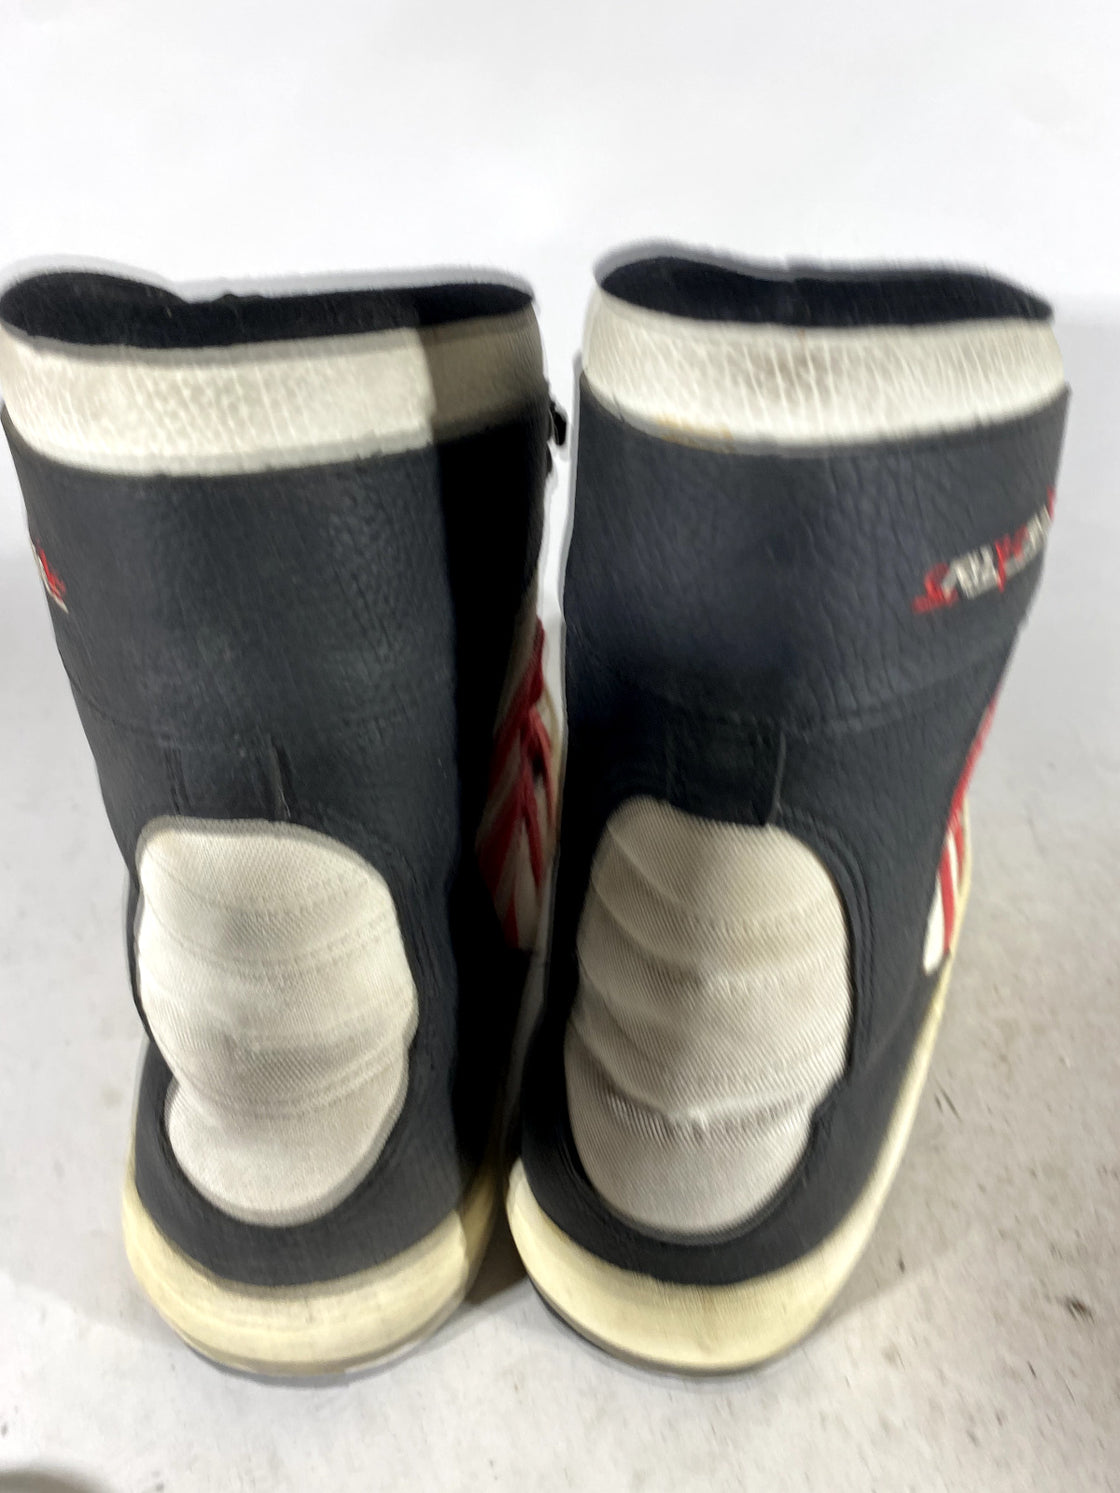 CYCAB Vintage Snowboard Boots Retro Size EU45 US11.5 UK10.5 Mondo 285 mm